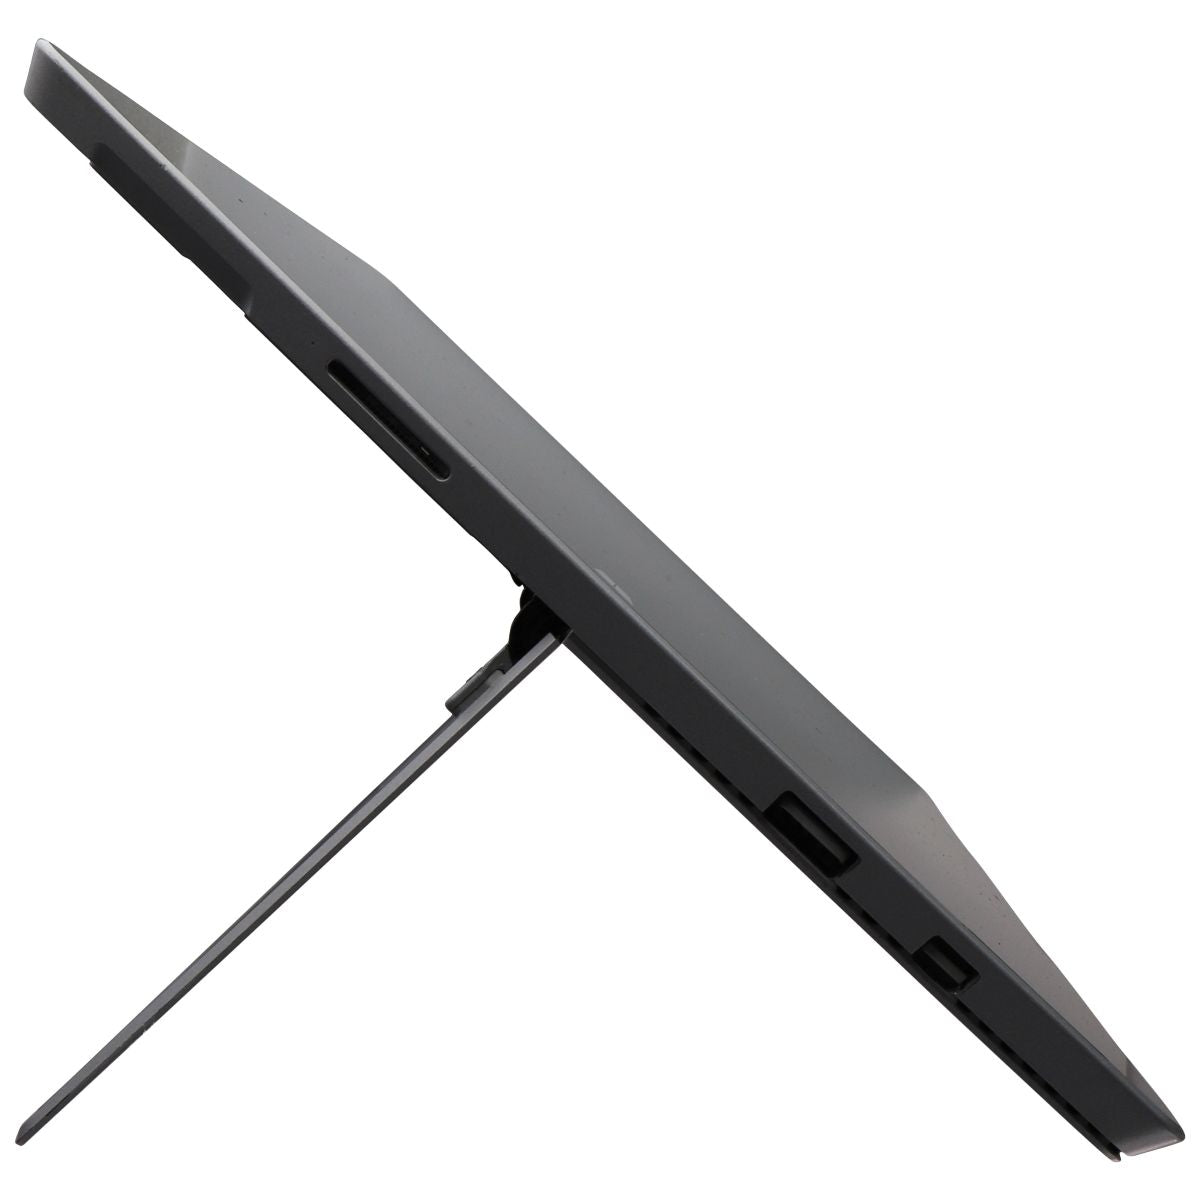 Microsoft Surface Pro 3 (12-inch) Tablet (1631) i5 4th Gen / 128GB / 4GB RAM Laptops - PC Laptops & Netbooks Microsoft    - Simple Cell Bulk Wholesale Pricing - USA Seller